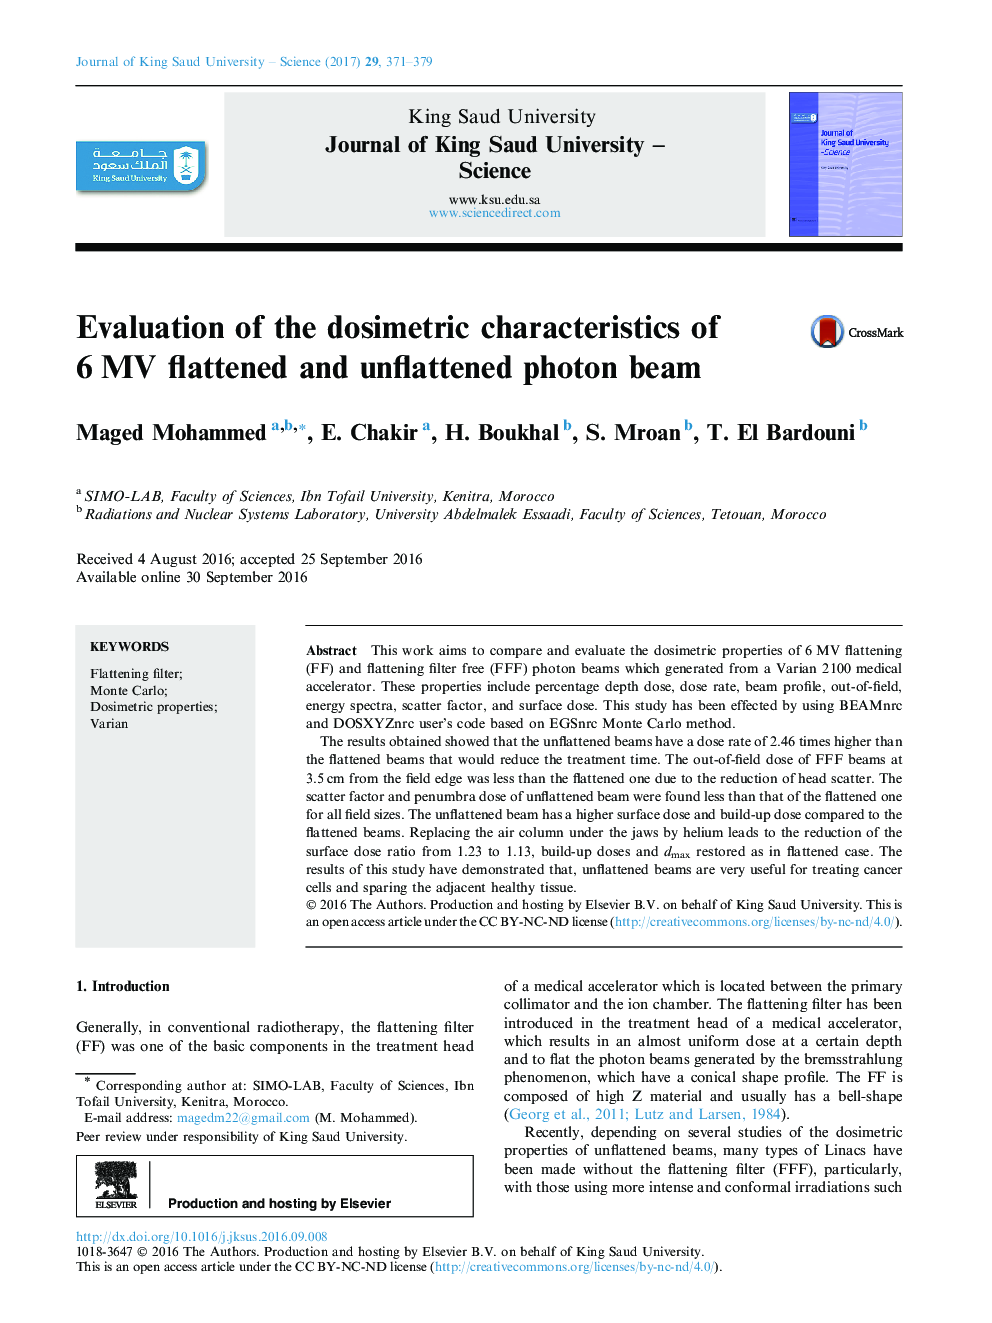 Evaluation of the dosimetric characteristics of 6 MV flattened and unflattened photon beam